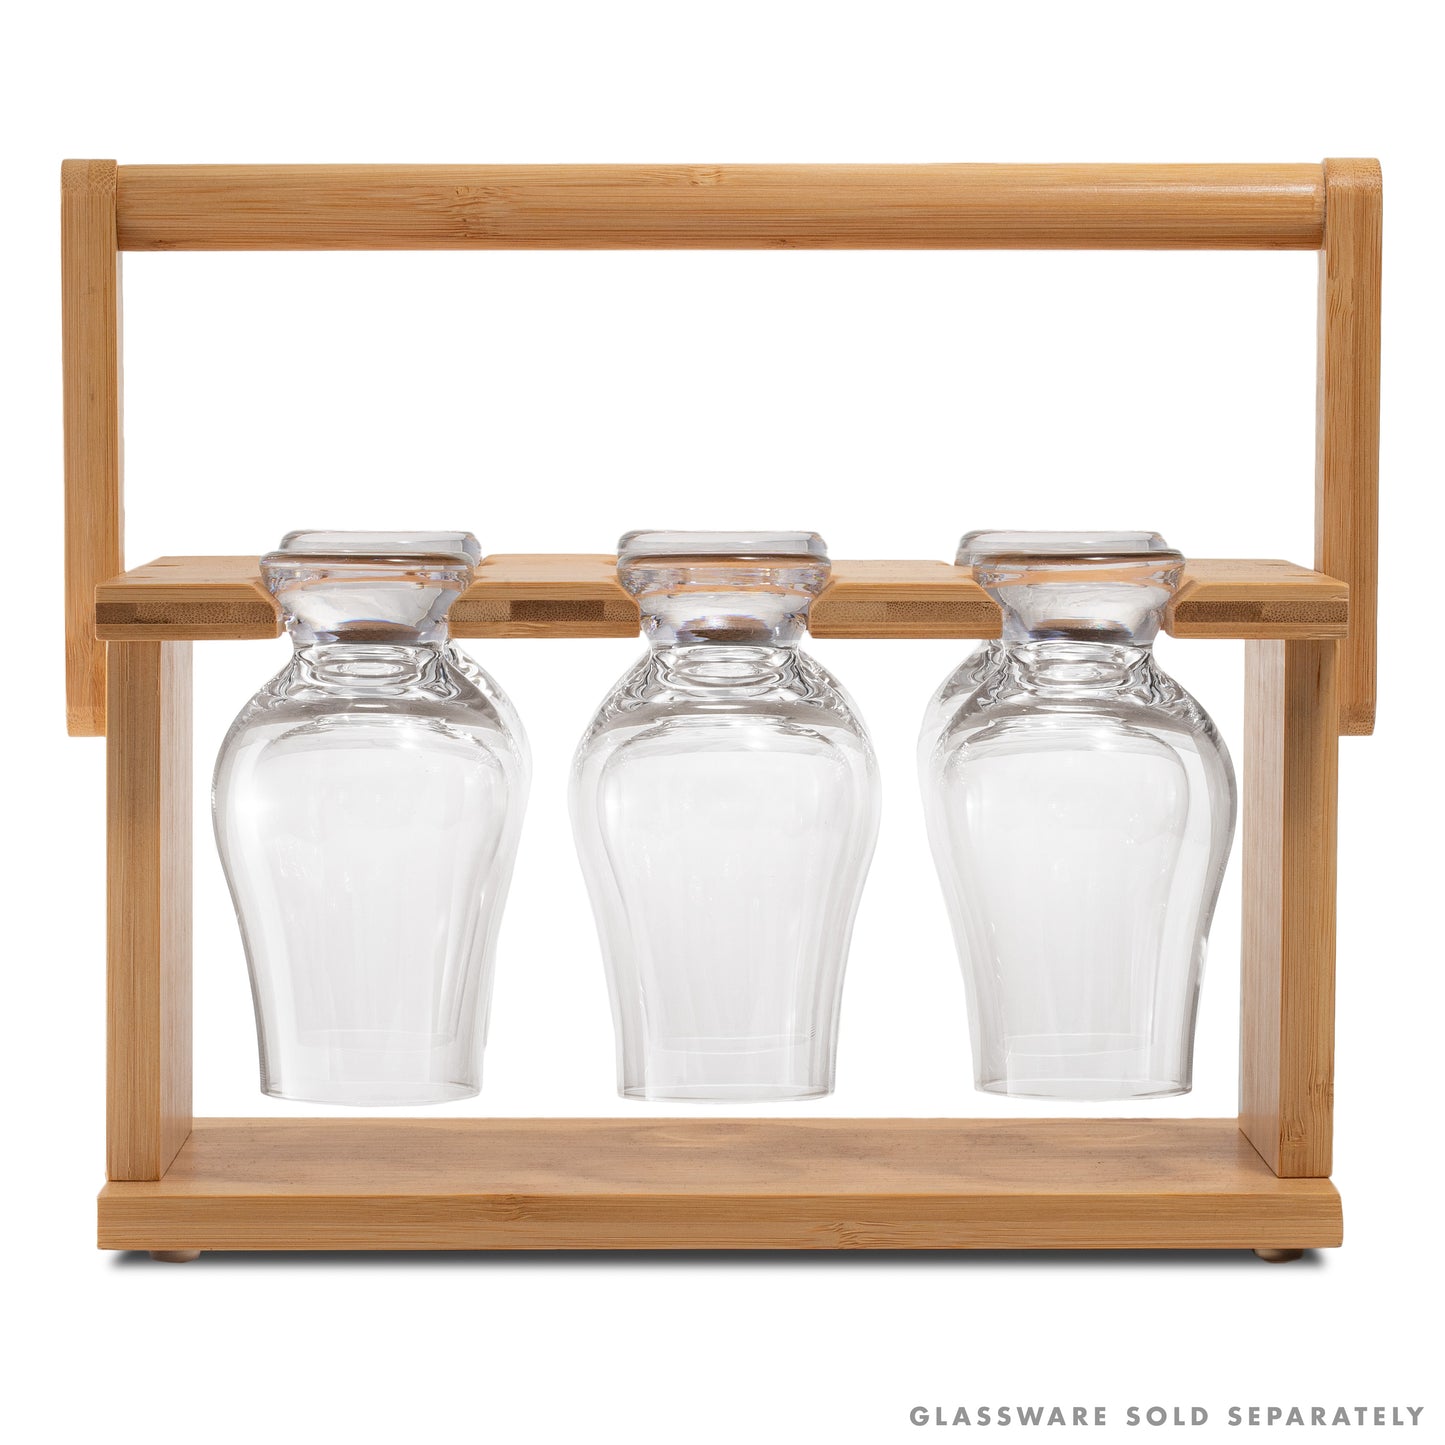 CairnCaddy Bamboo Whiskey Glass Holder - Carrier and Drying Rack for Whisky Tasting Glassware  --